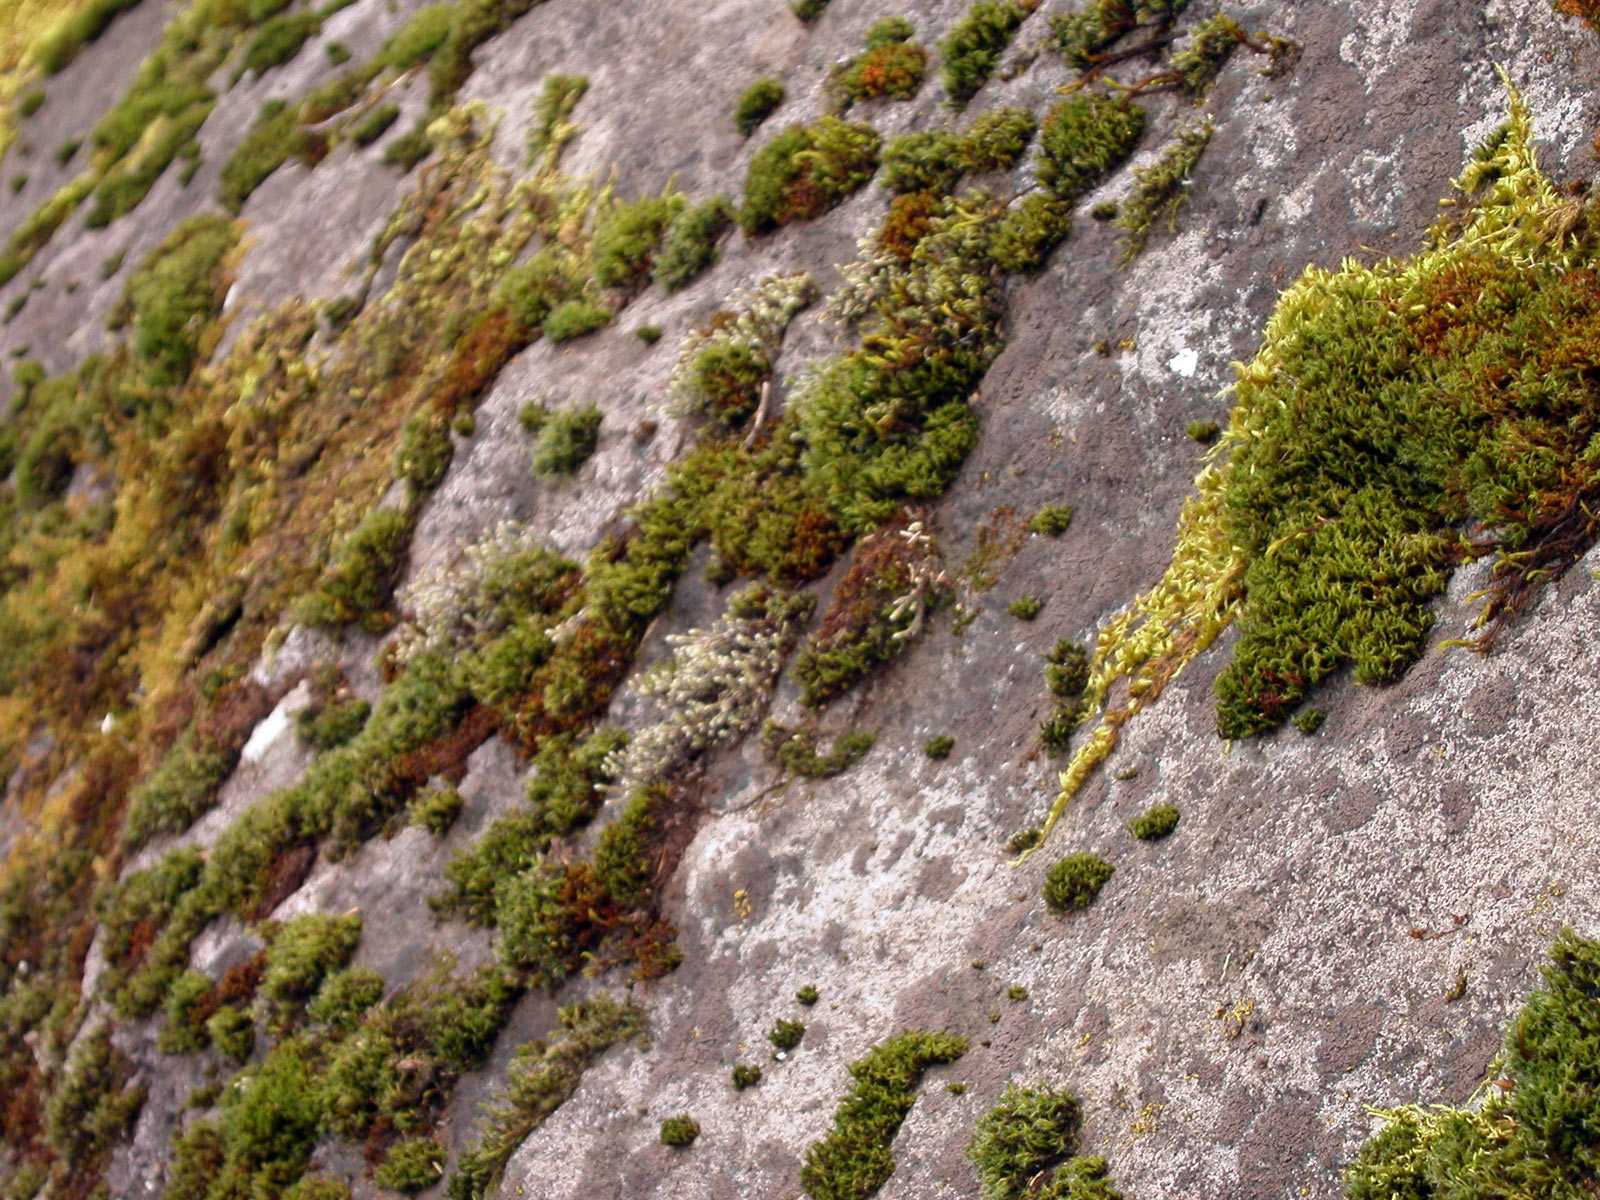 Moss on rocks, Green, Moss, Plant, Rock, HQ Photo